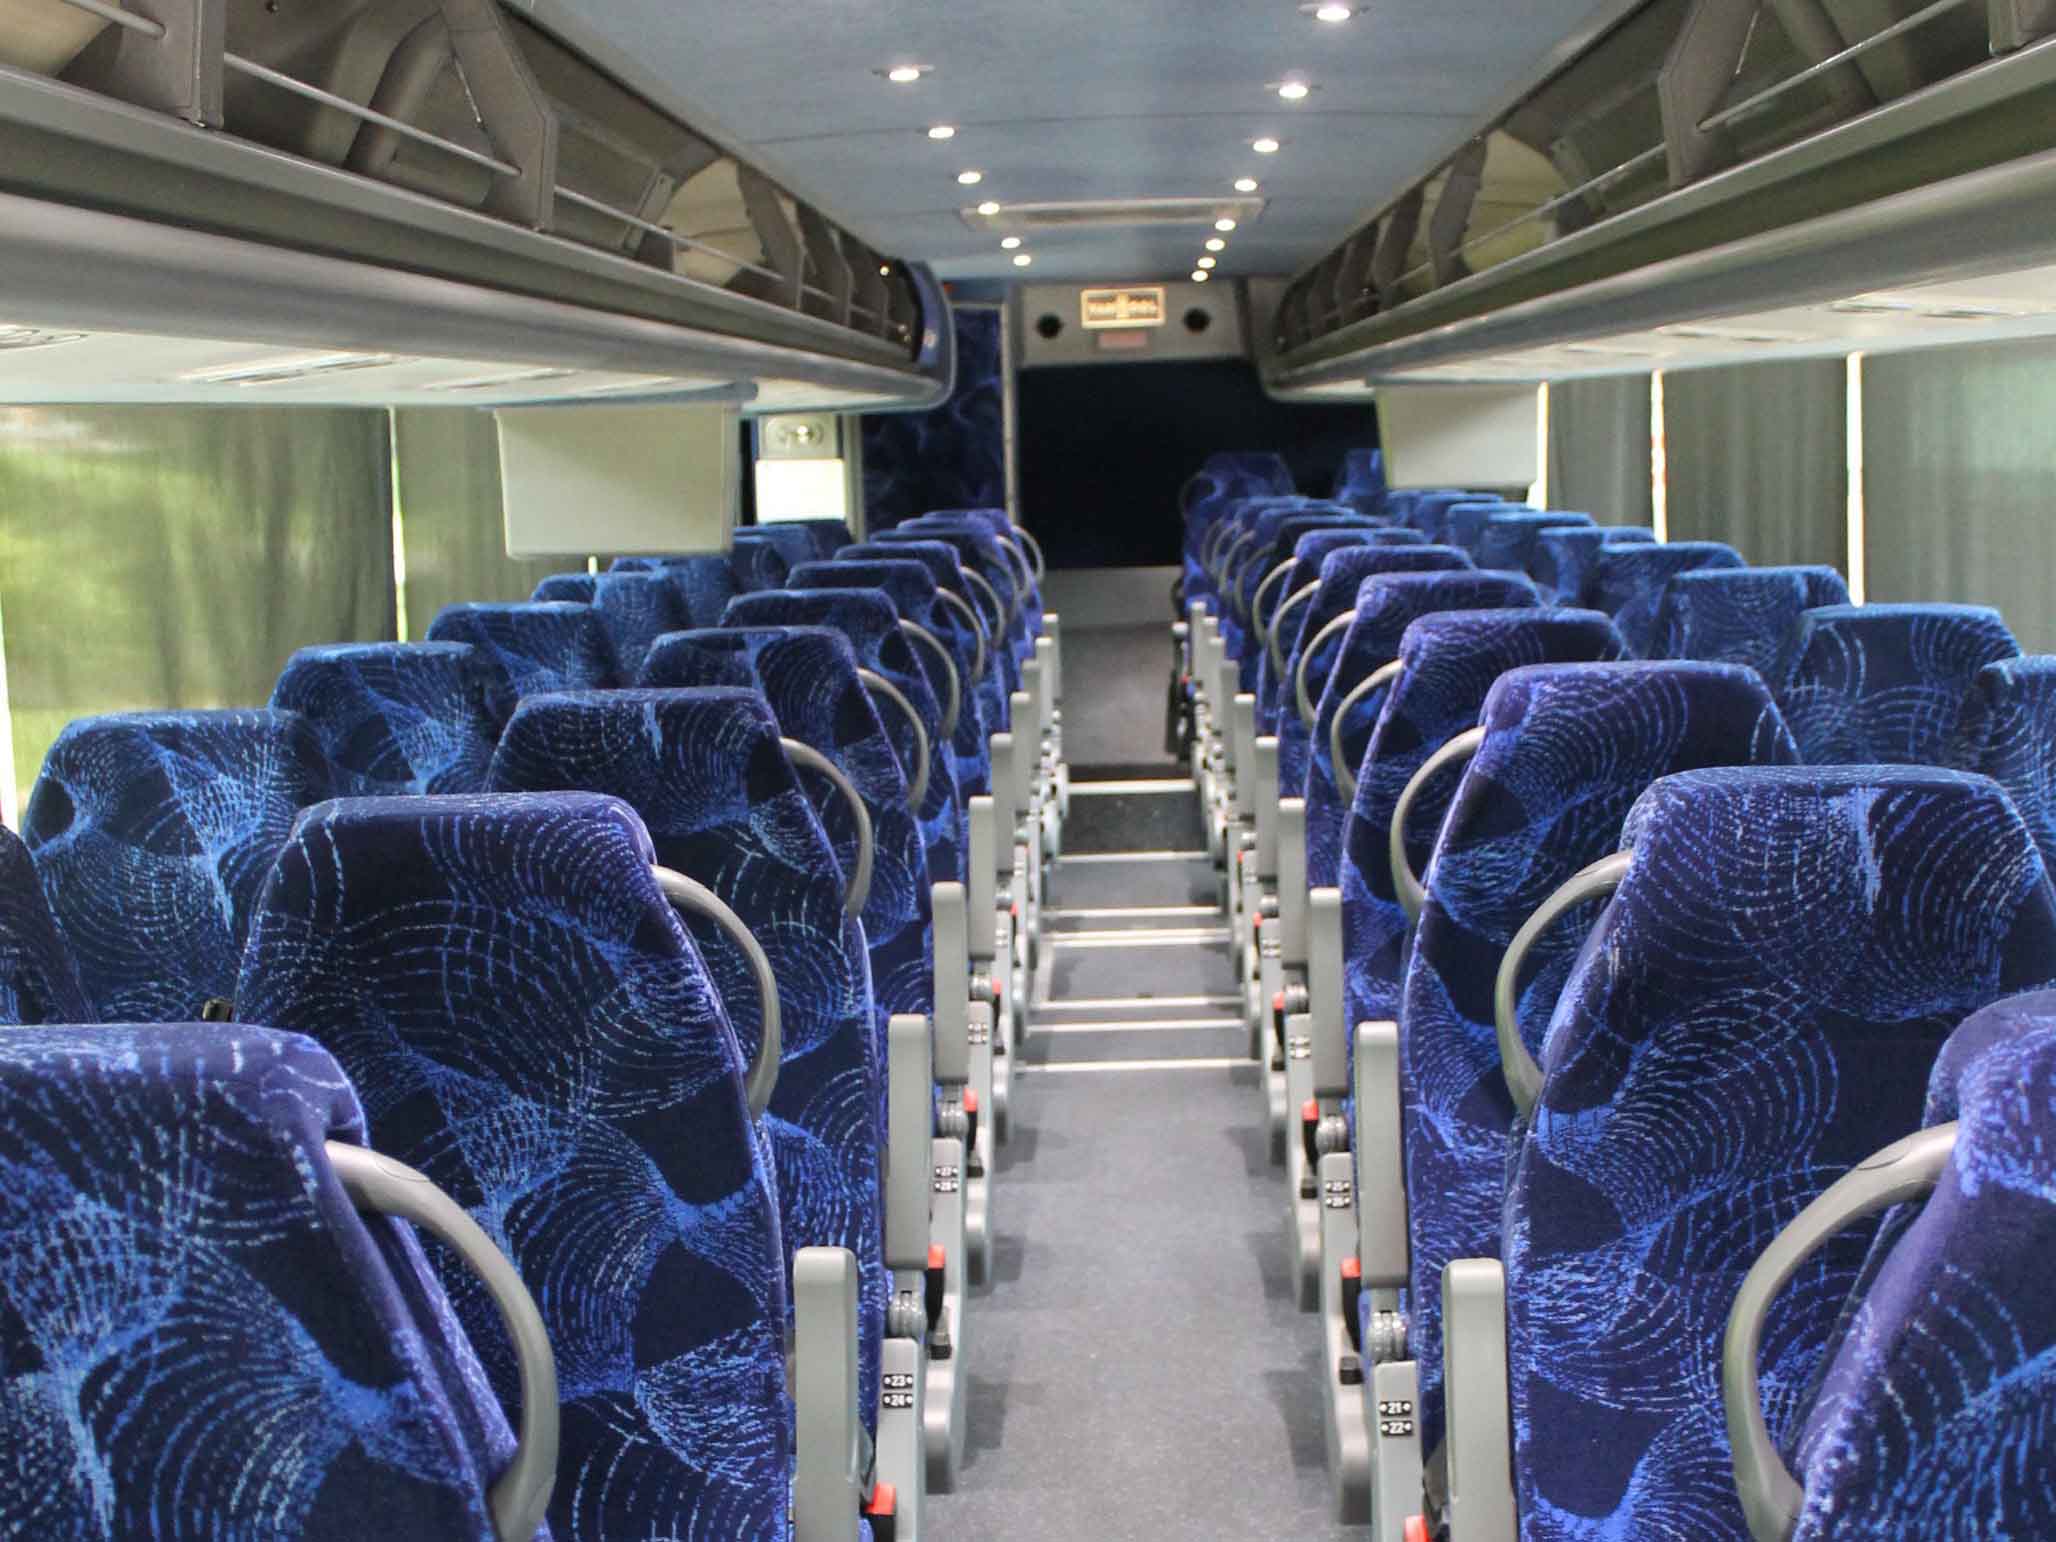 Huskey 57 Passenger bus seats